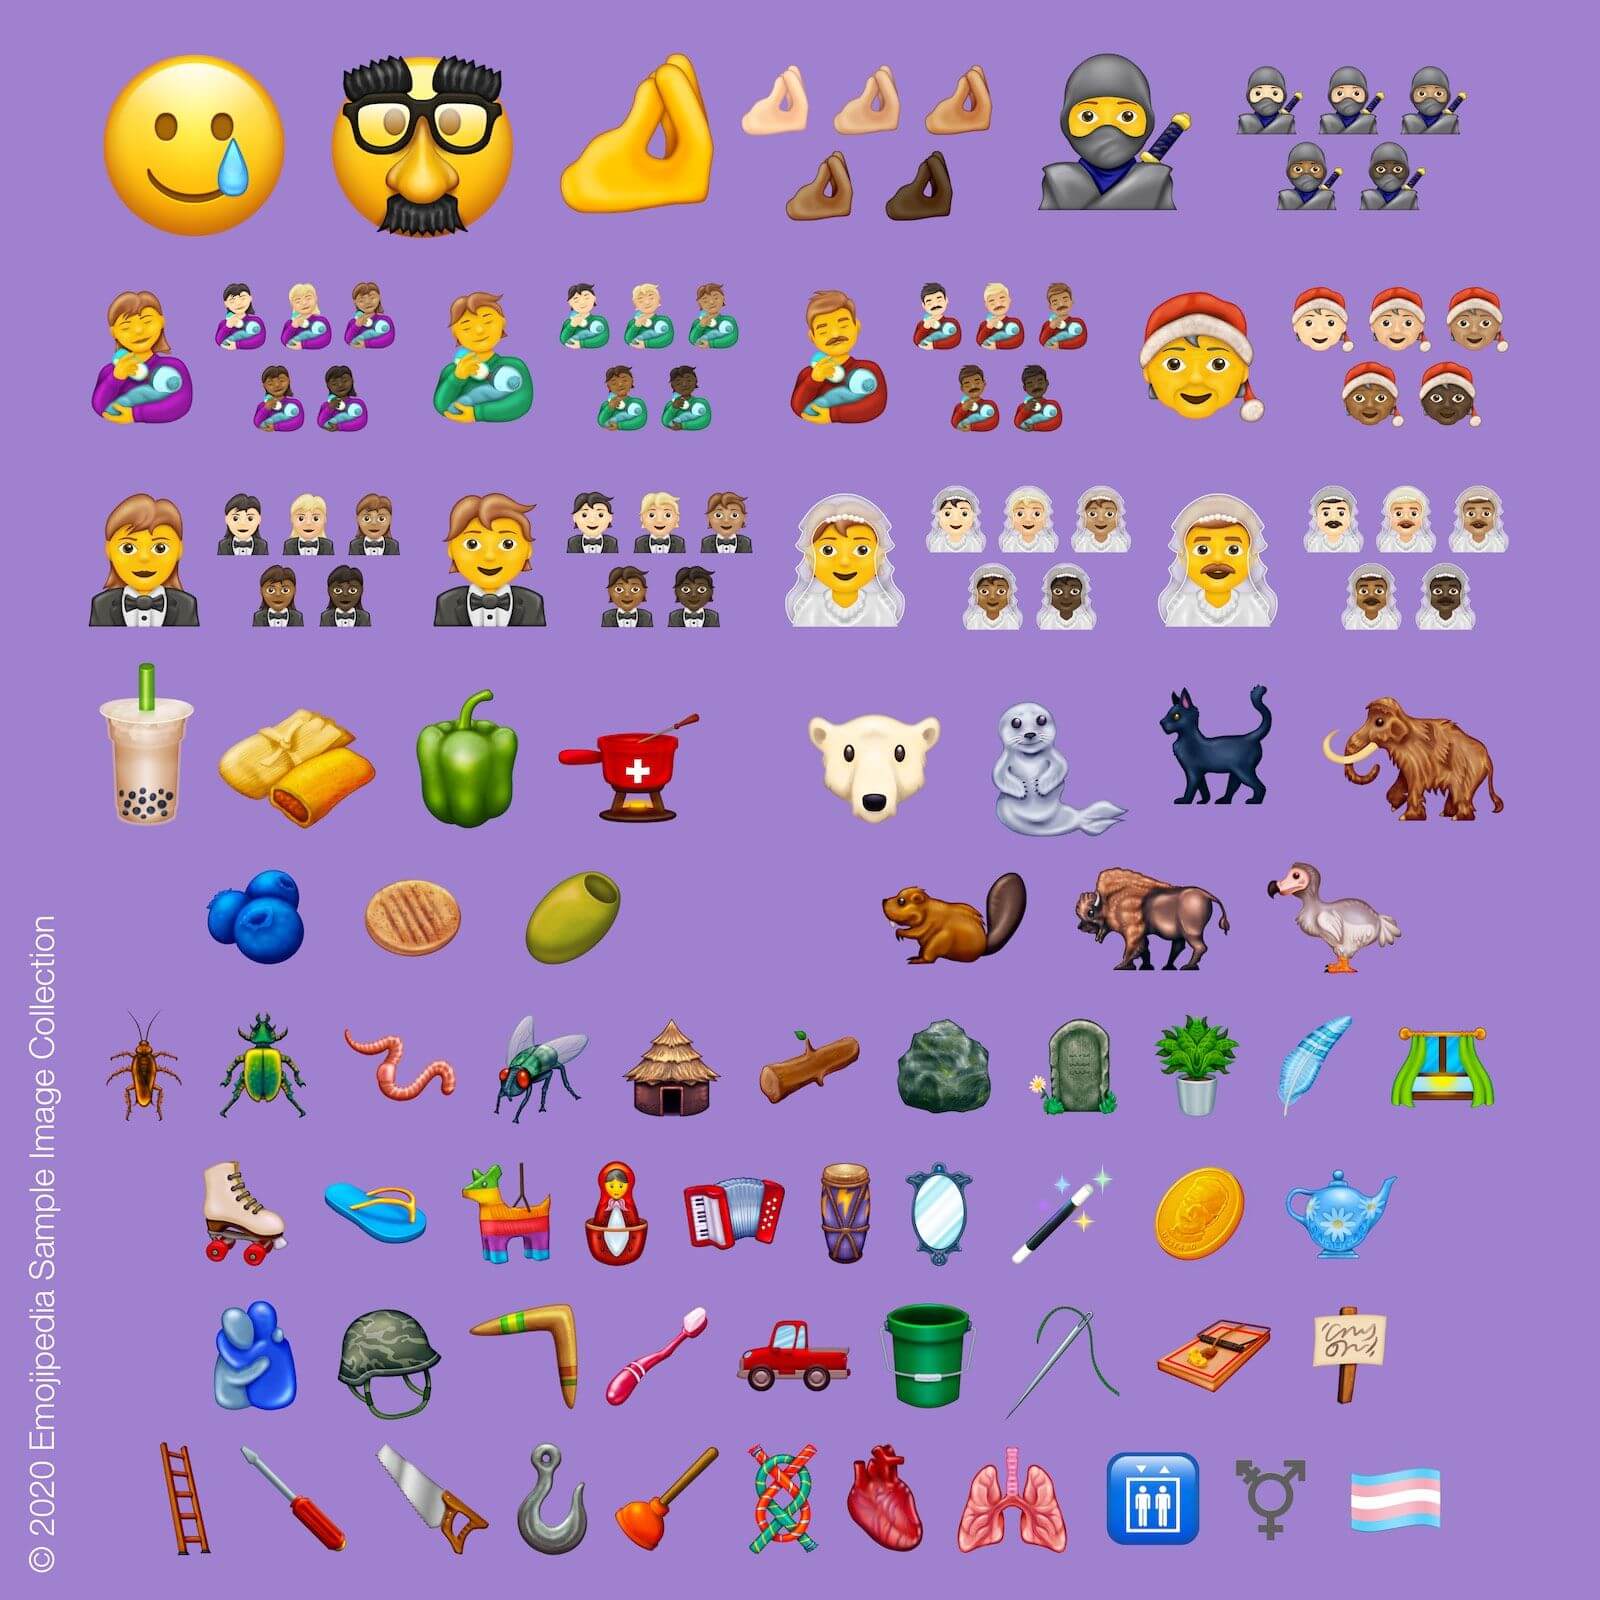 Unicode Consortium adds 62 new emoji for 2020